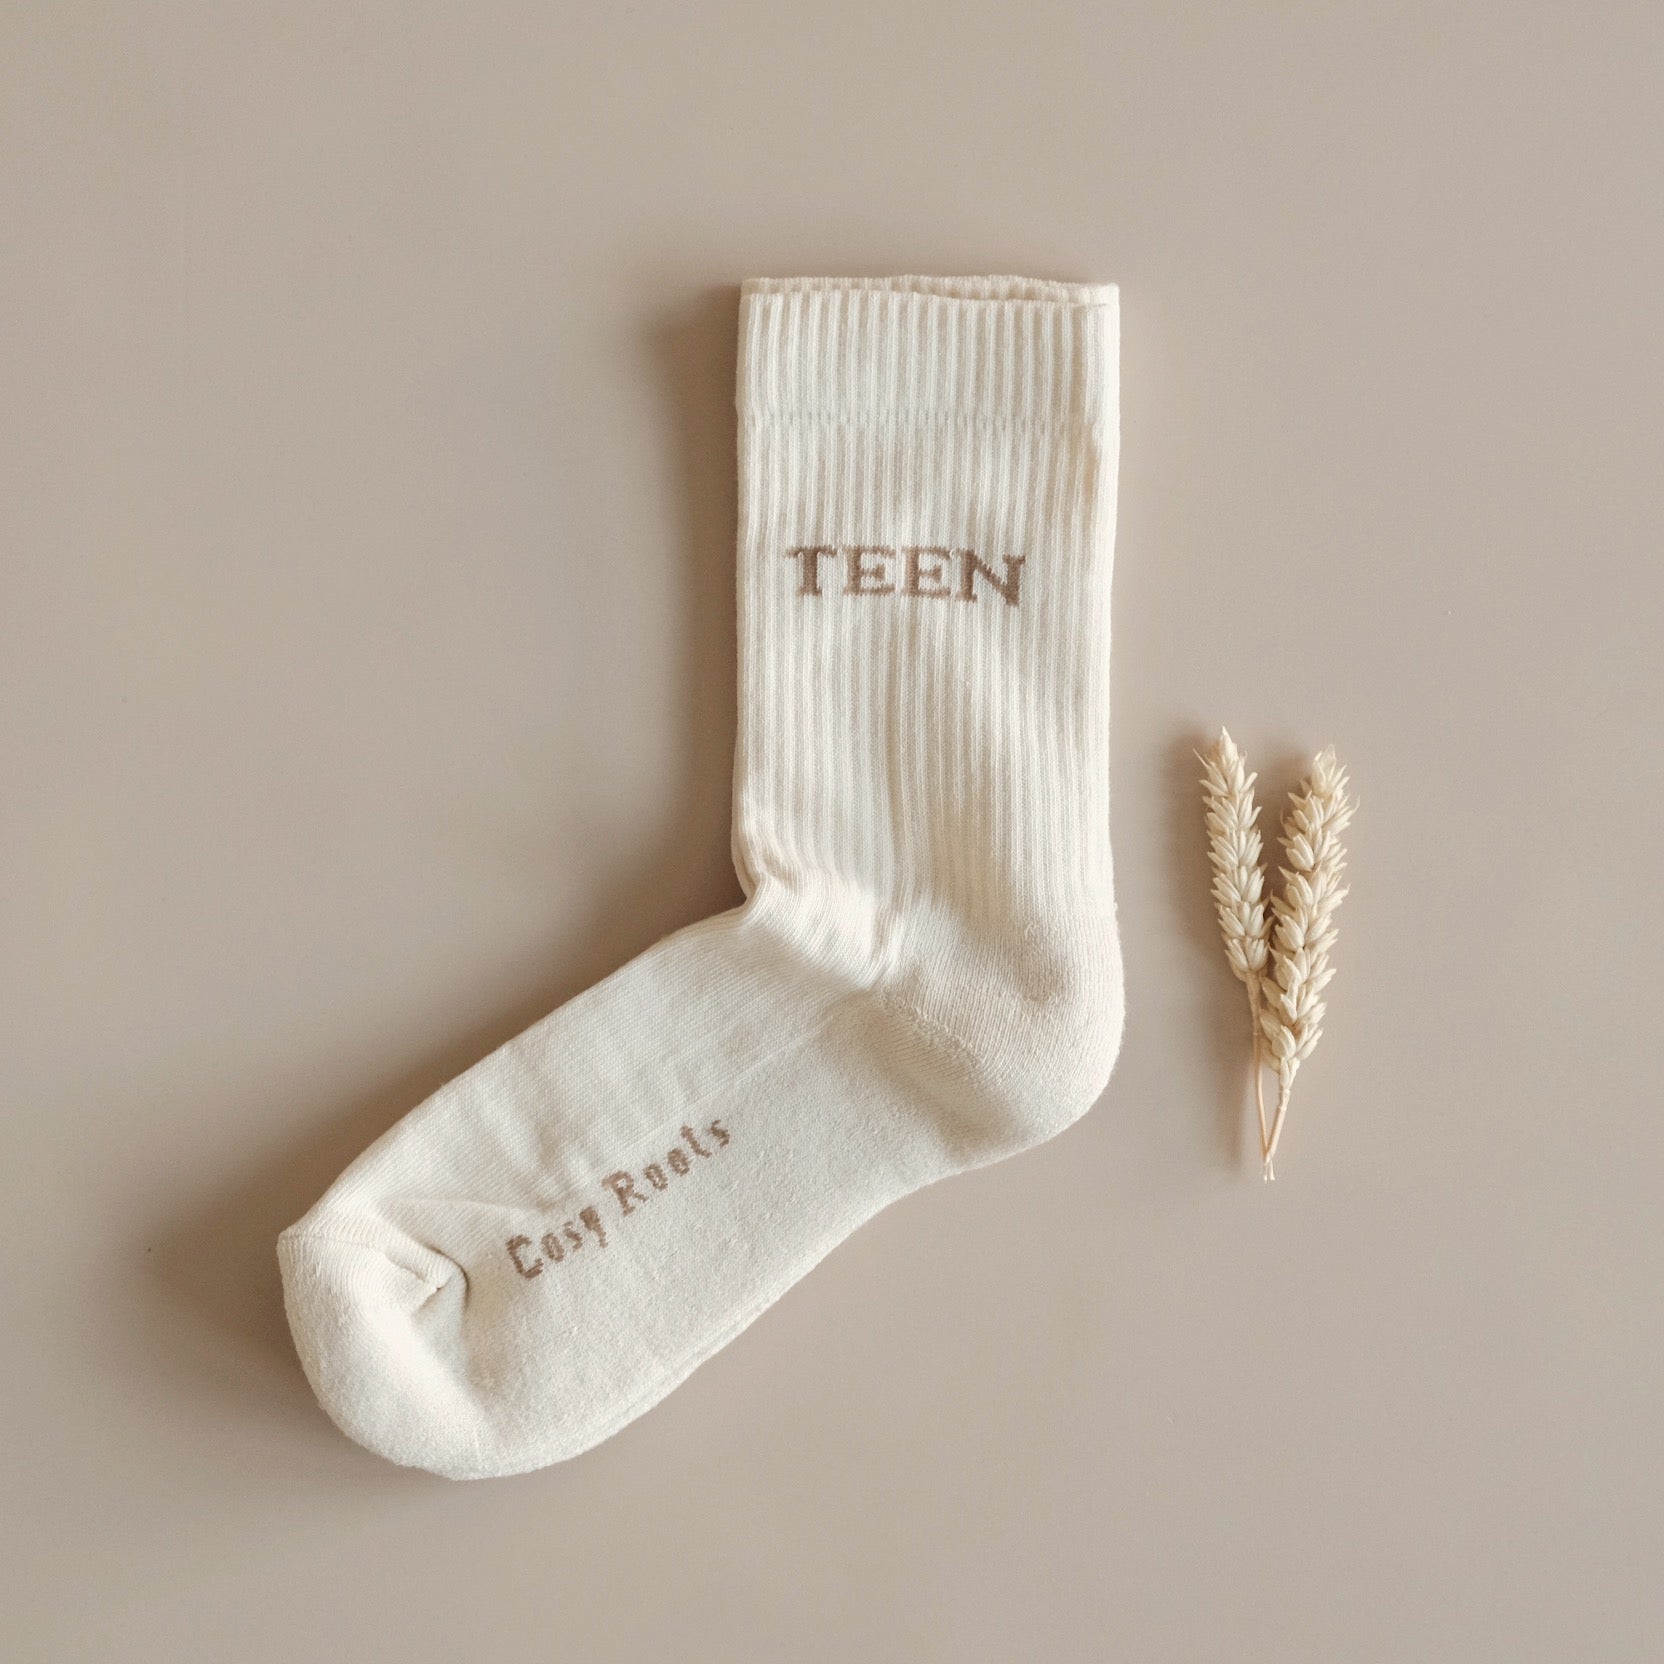 Organic Socks - TEEN - Sand